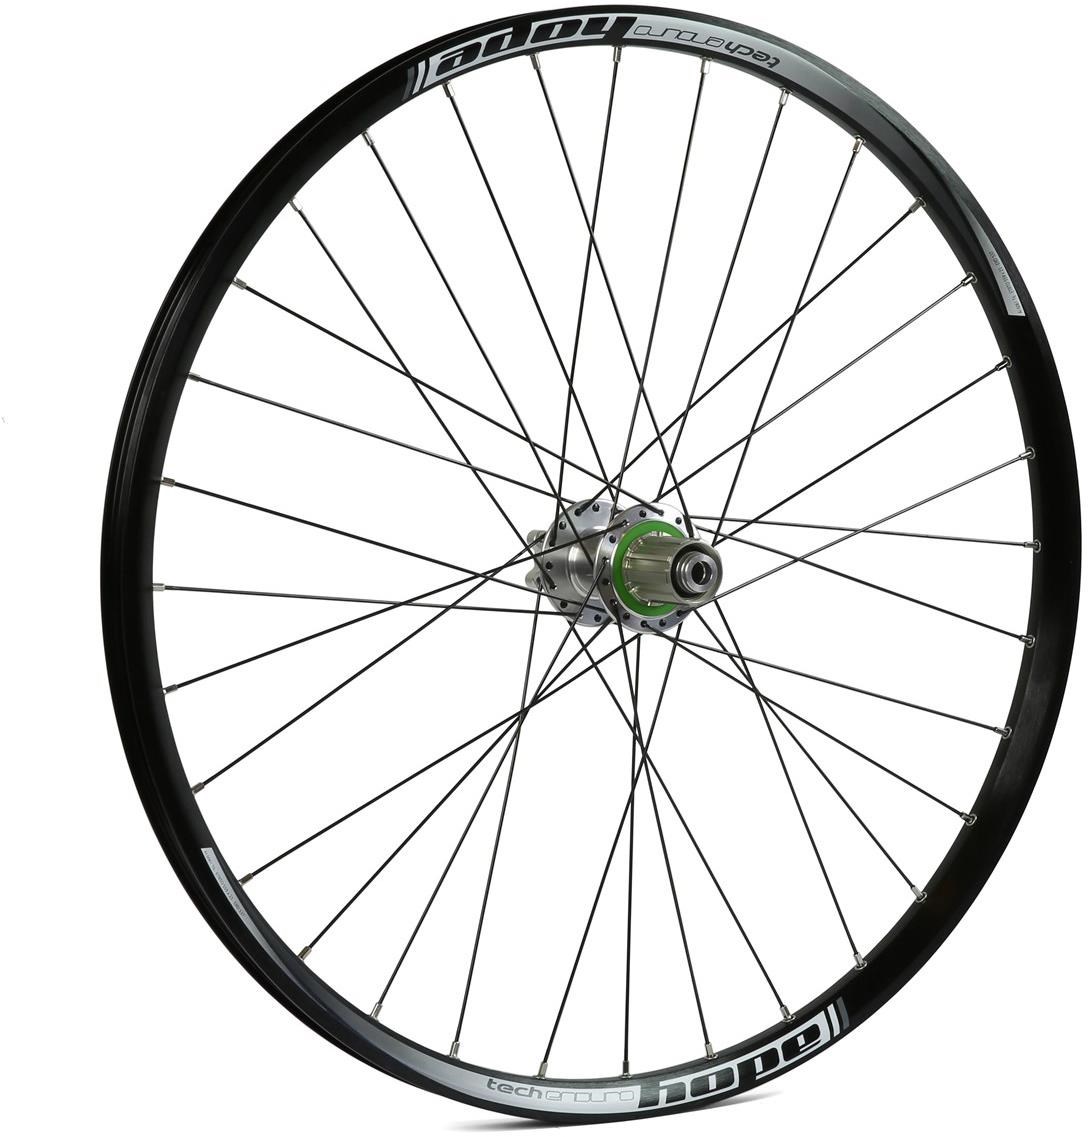 Hope Tech Enduro - Pro 4 26" Rear Wheel - Silver product image